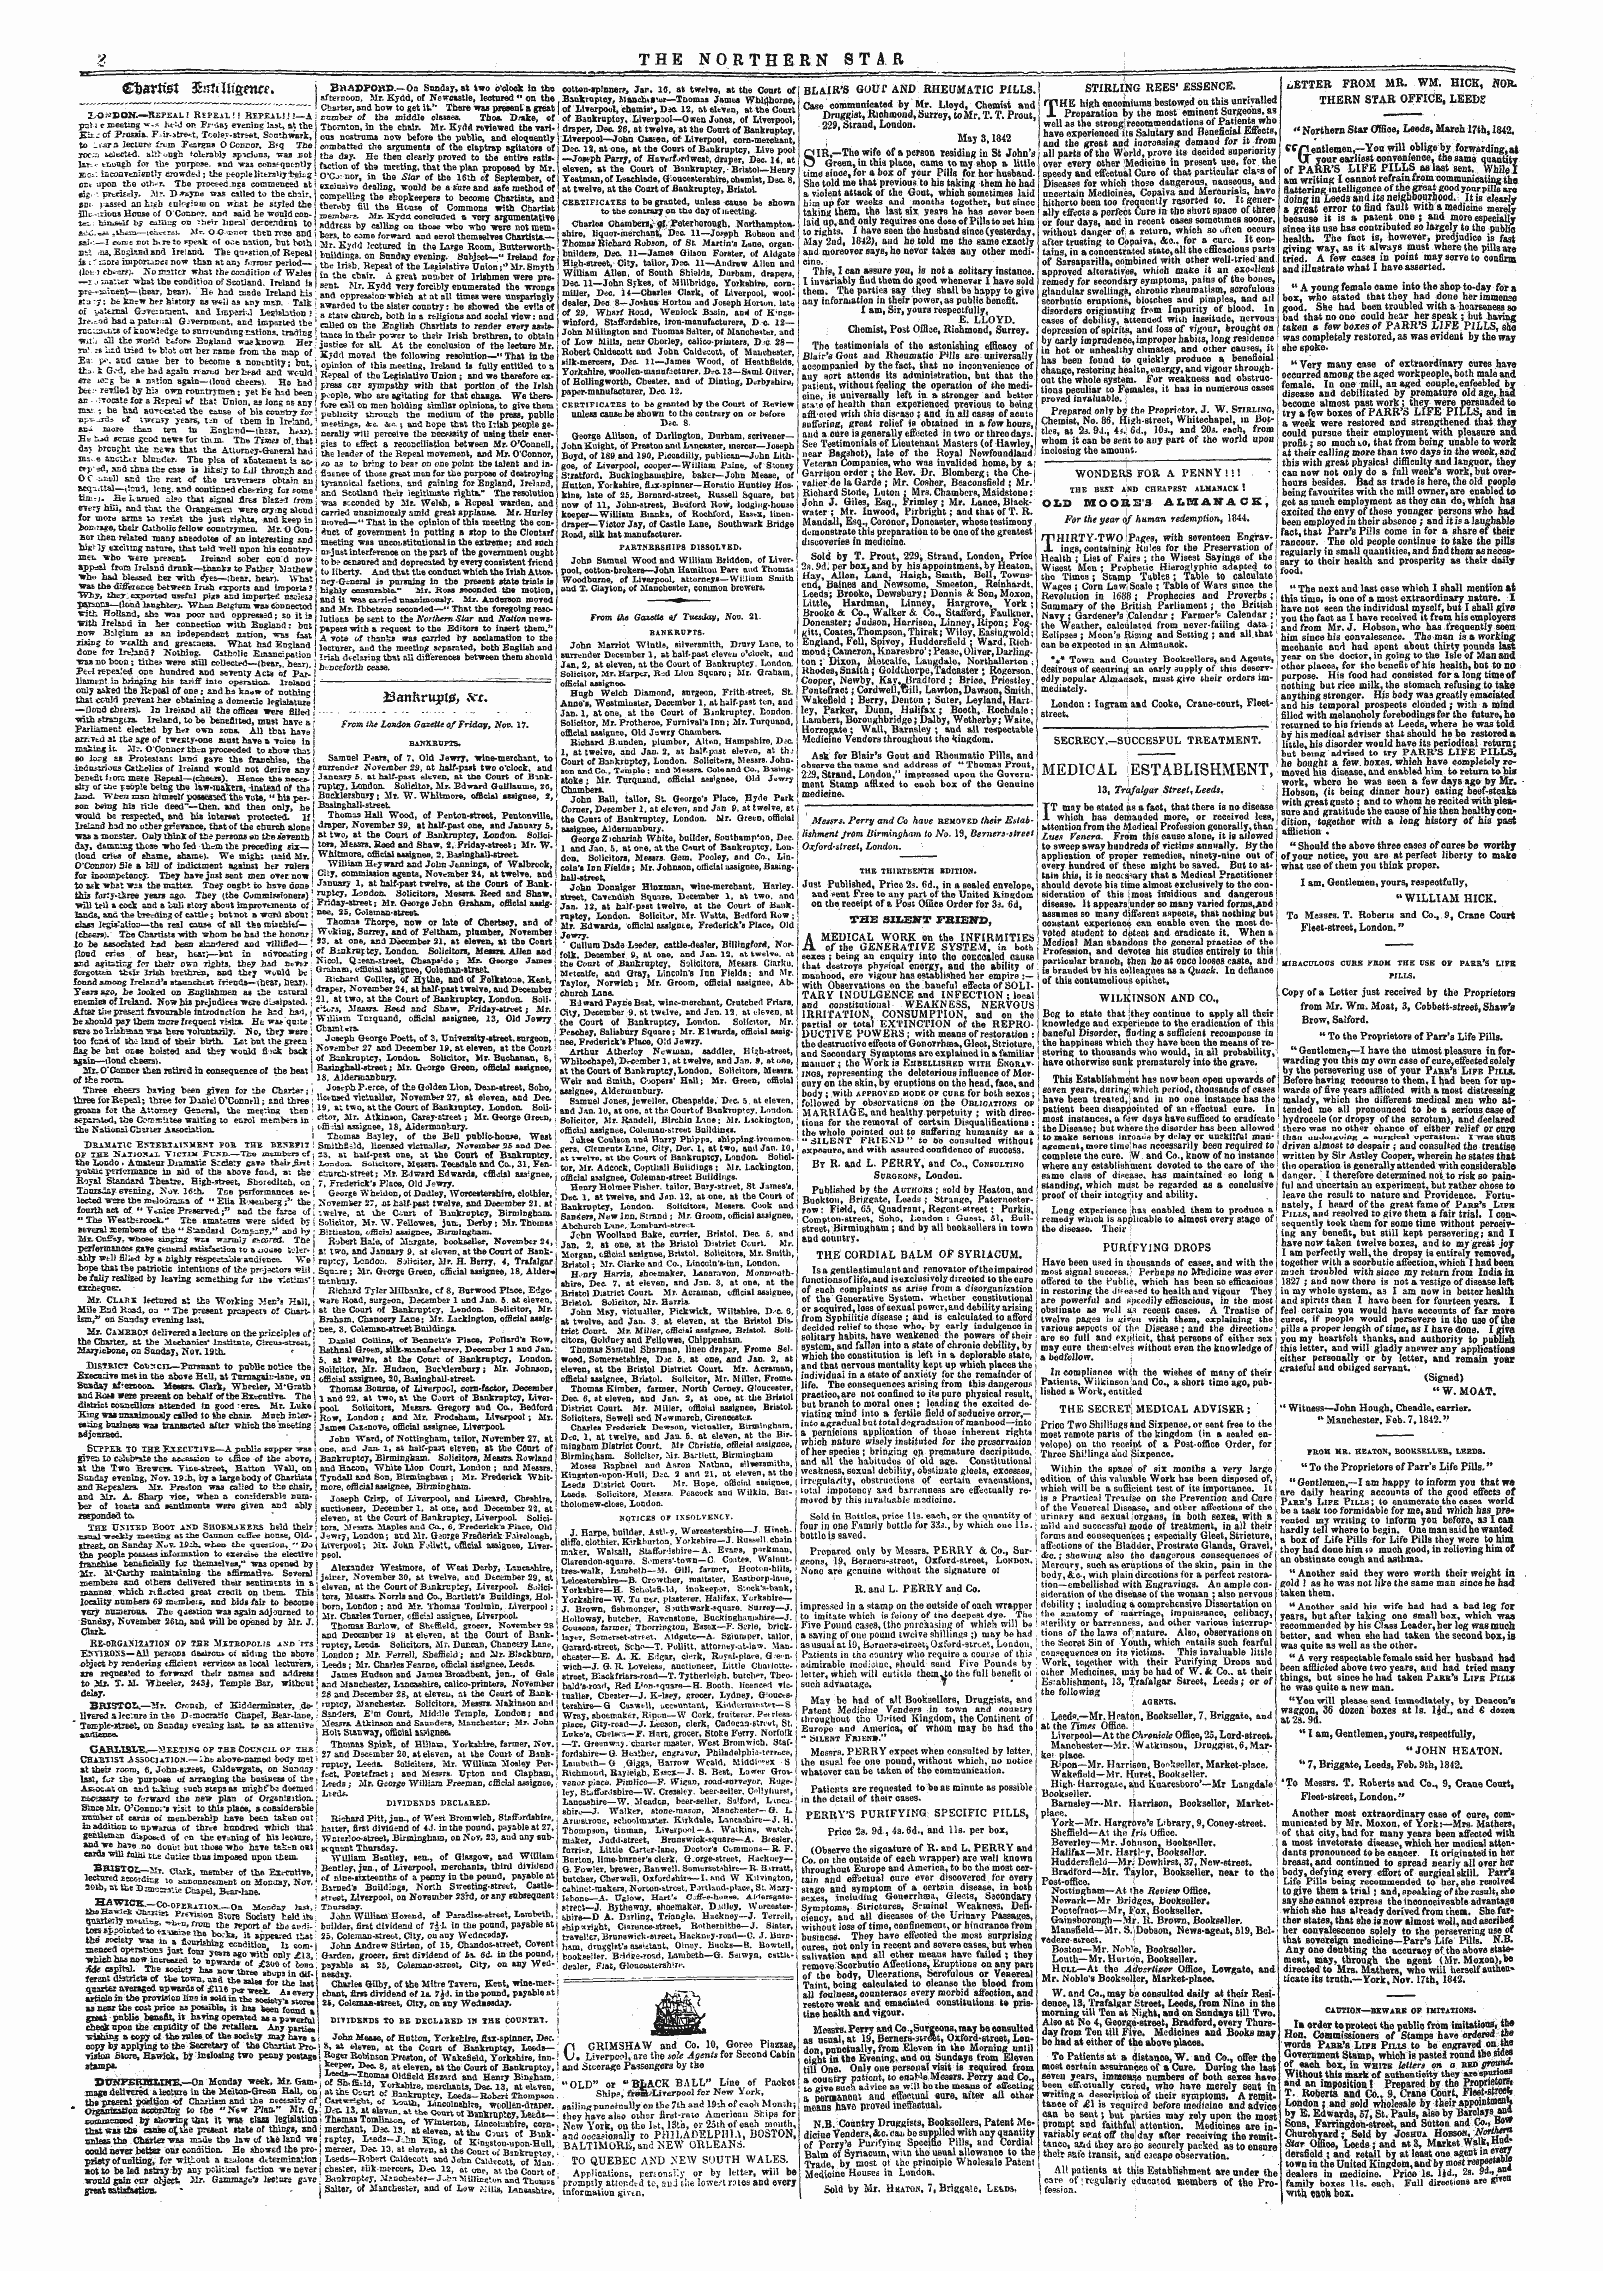 Northern Star (1837-1852): jS F Y, 7th edition: 2